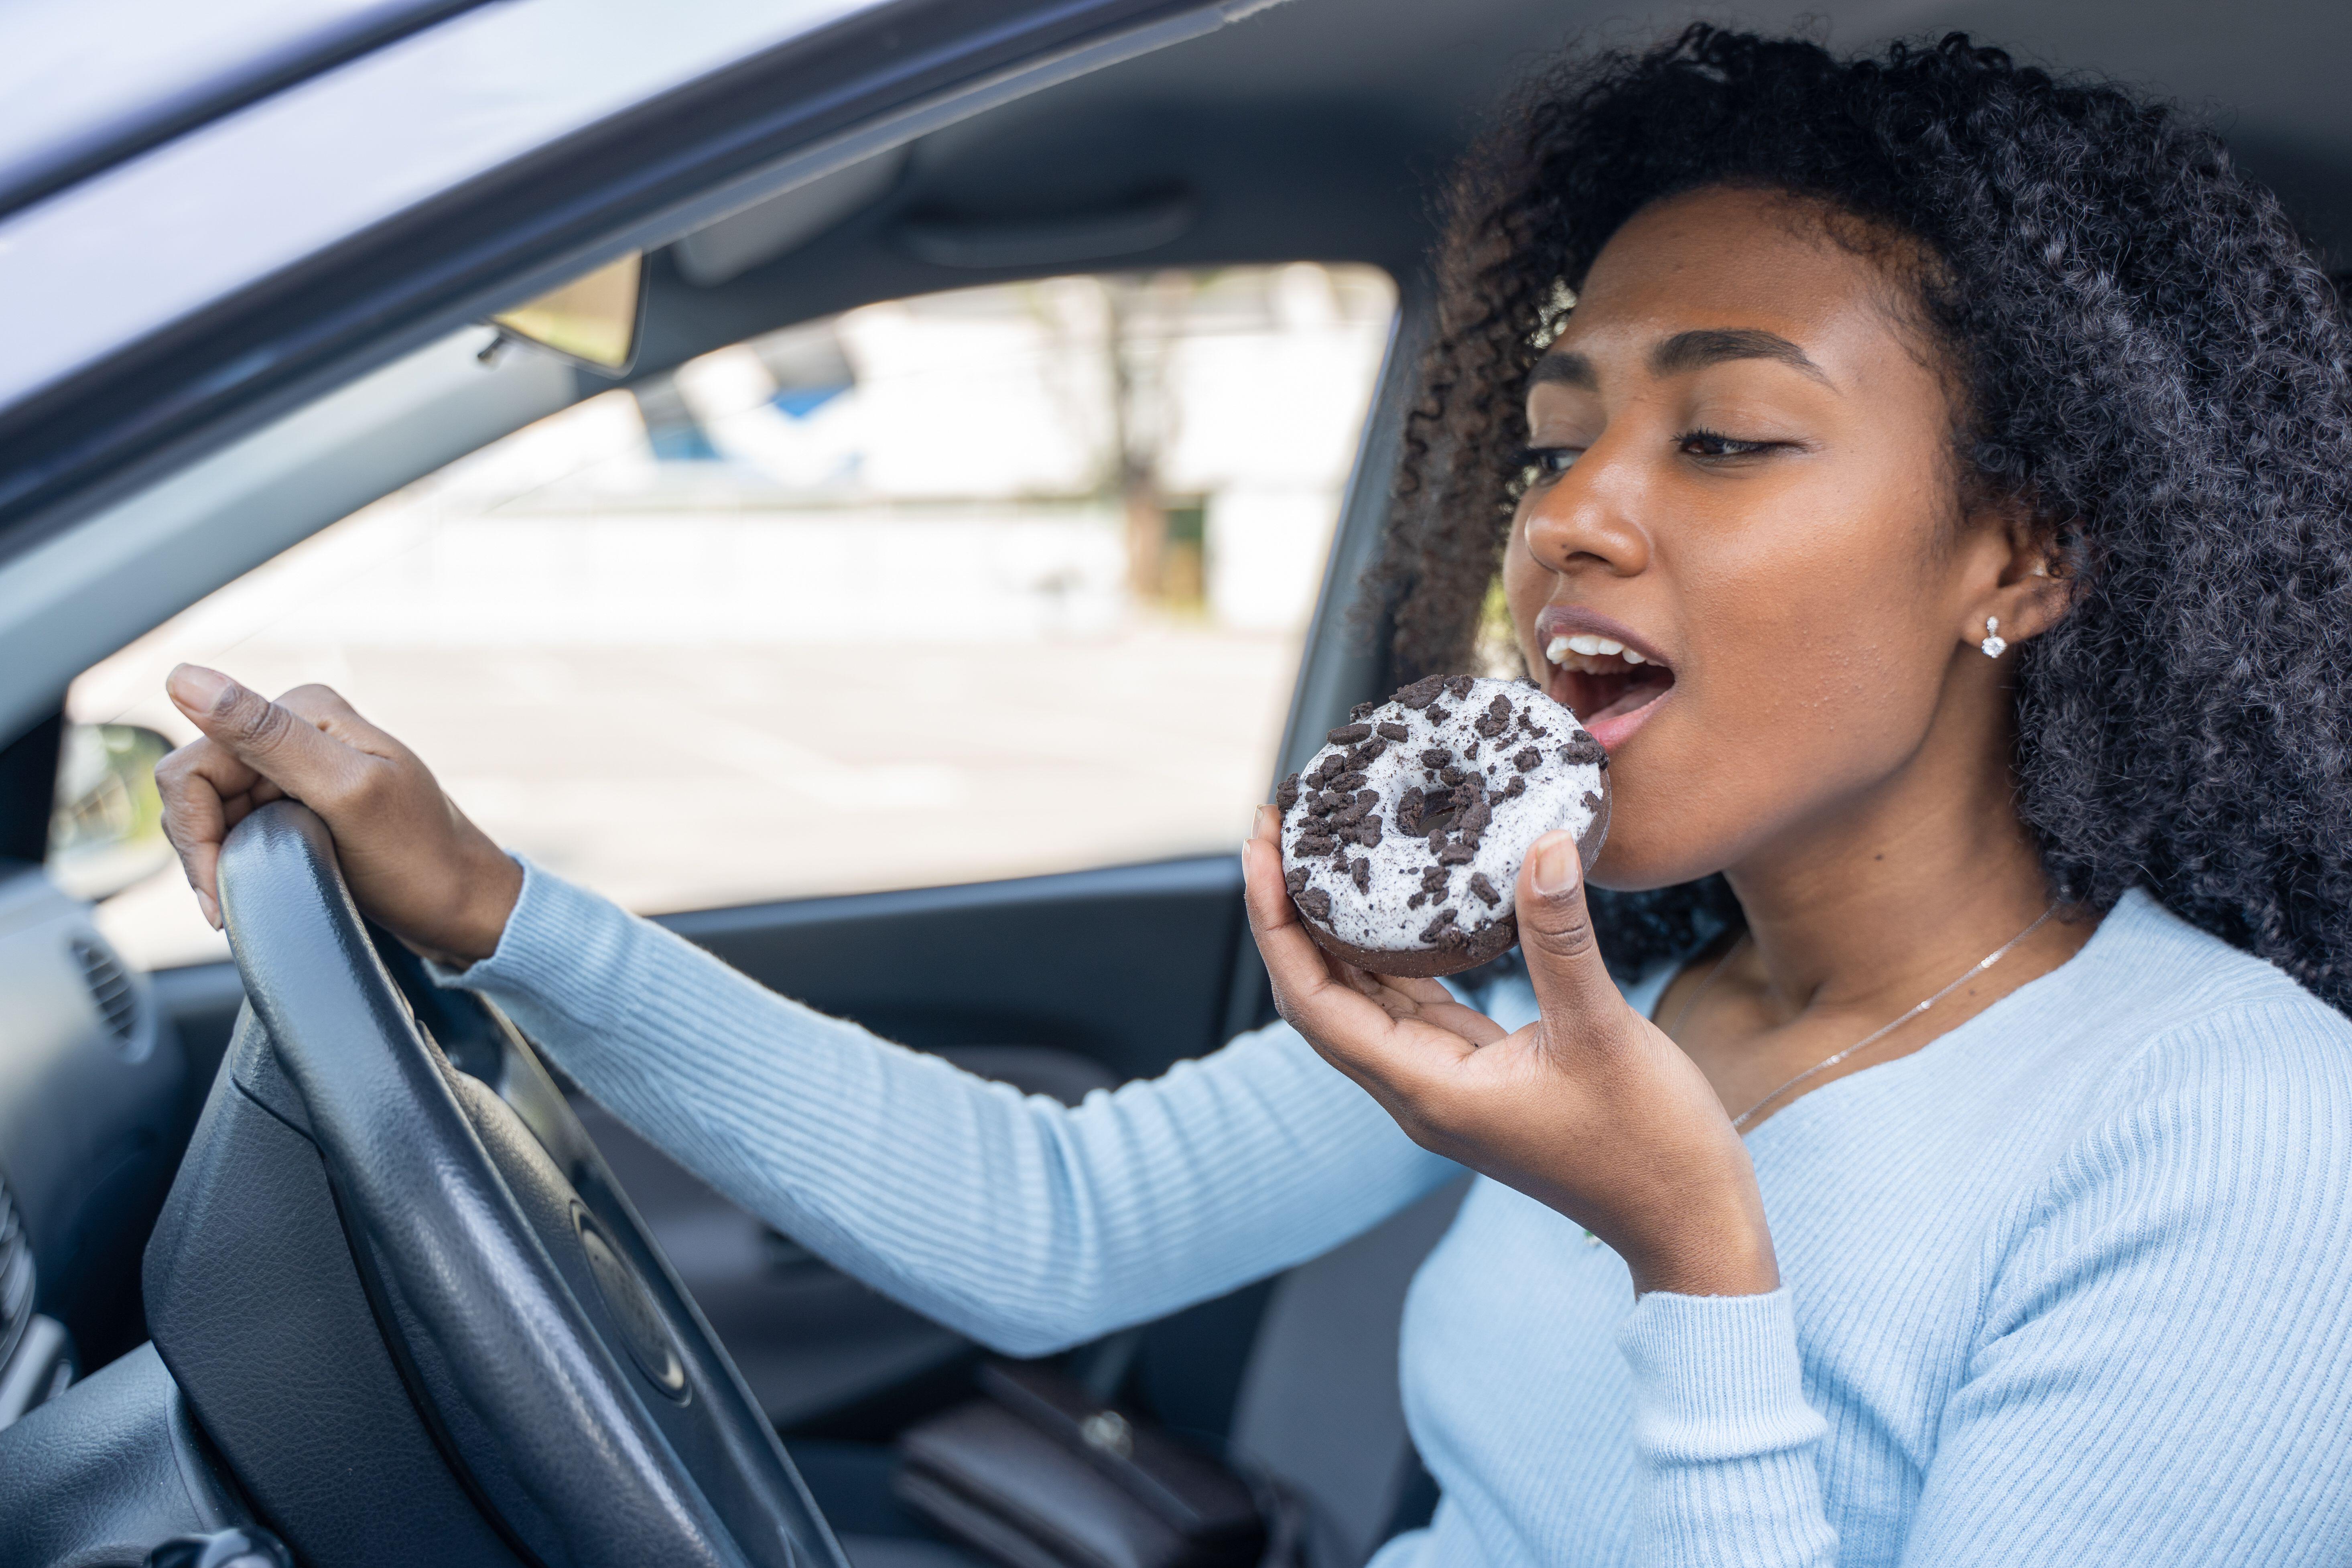 One black woman smiling eating a doughnut